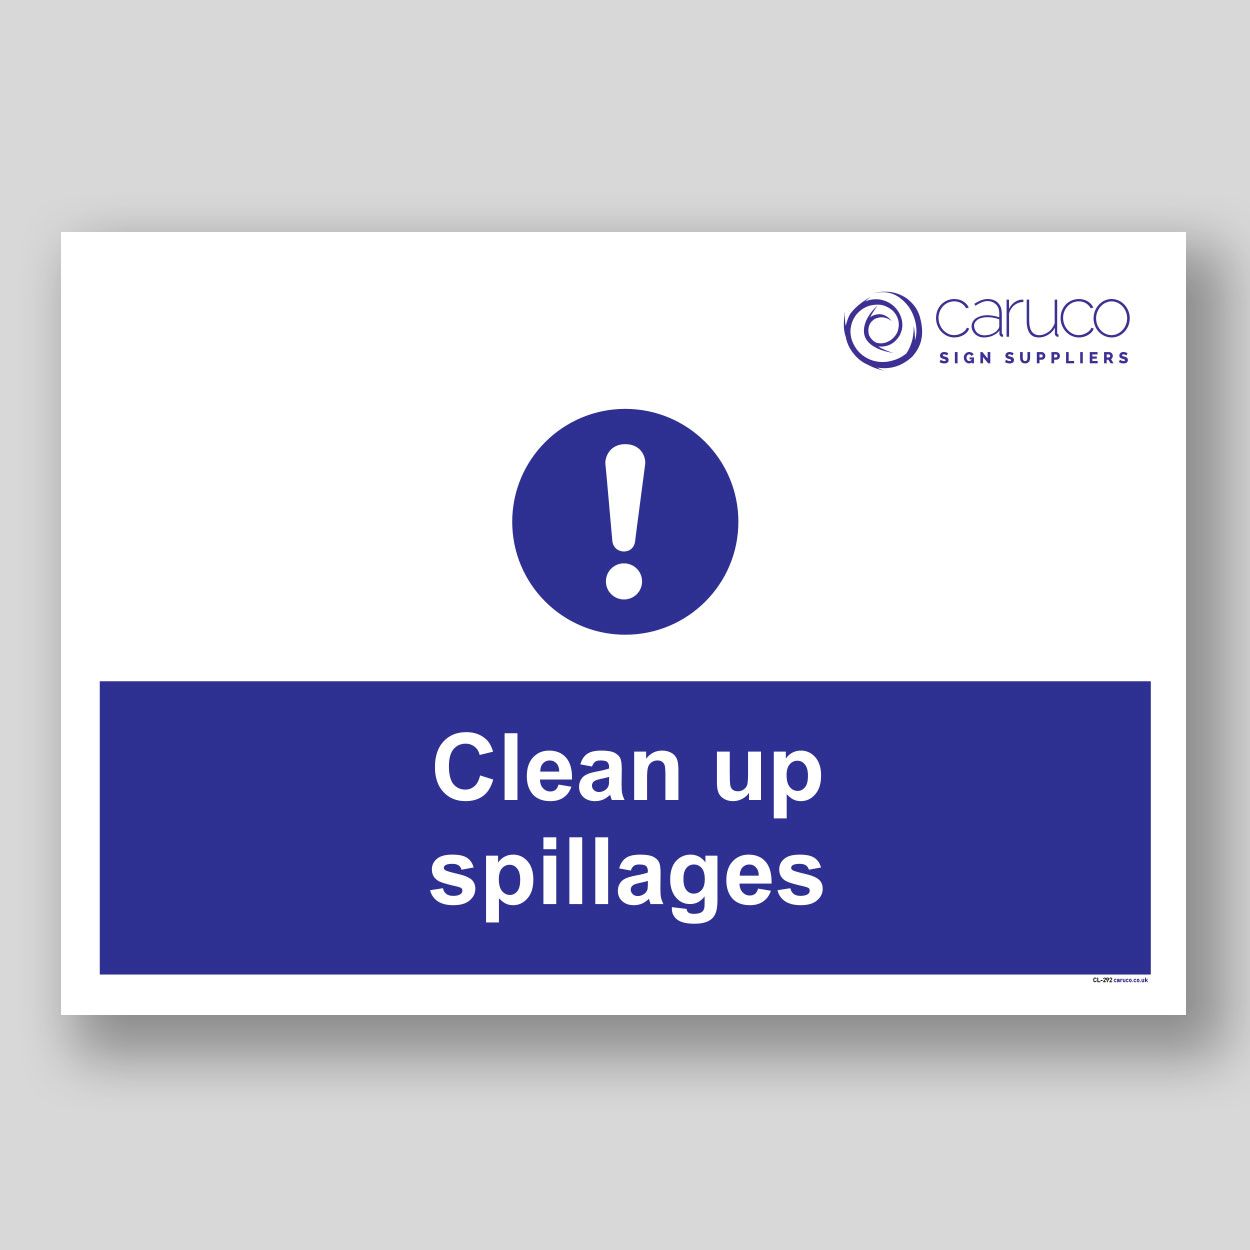 CL-292 Clean up spillages